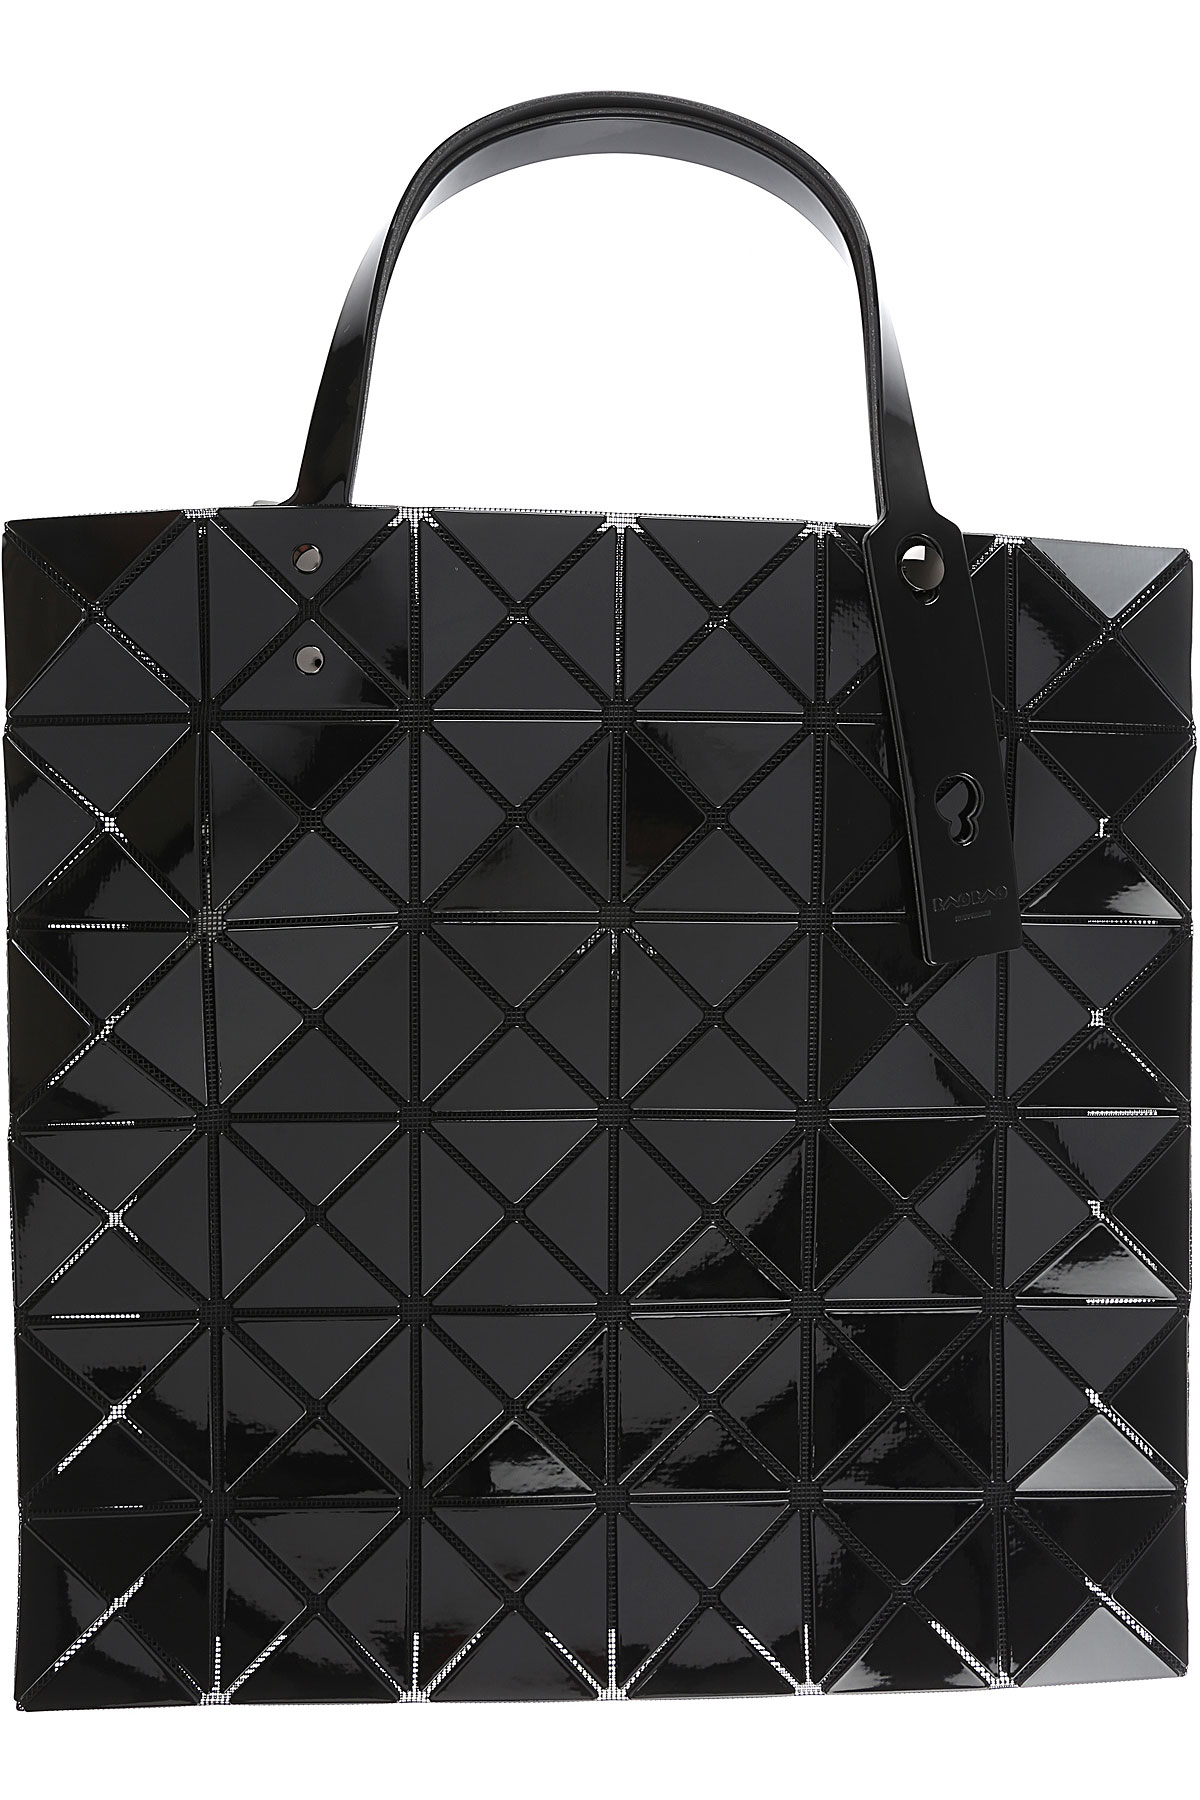 Handbags Issey Miyake, Style code: bb88ag053-15-